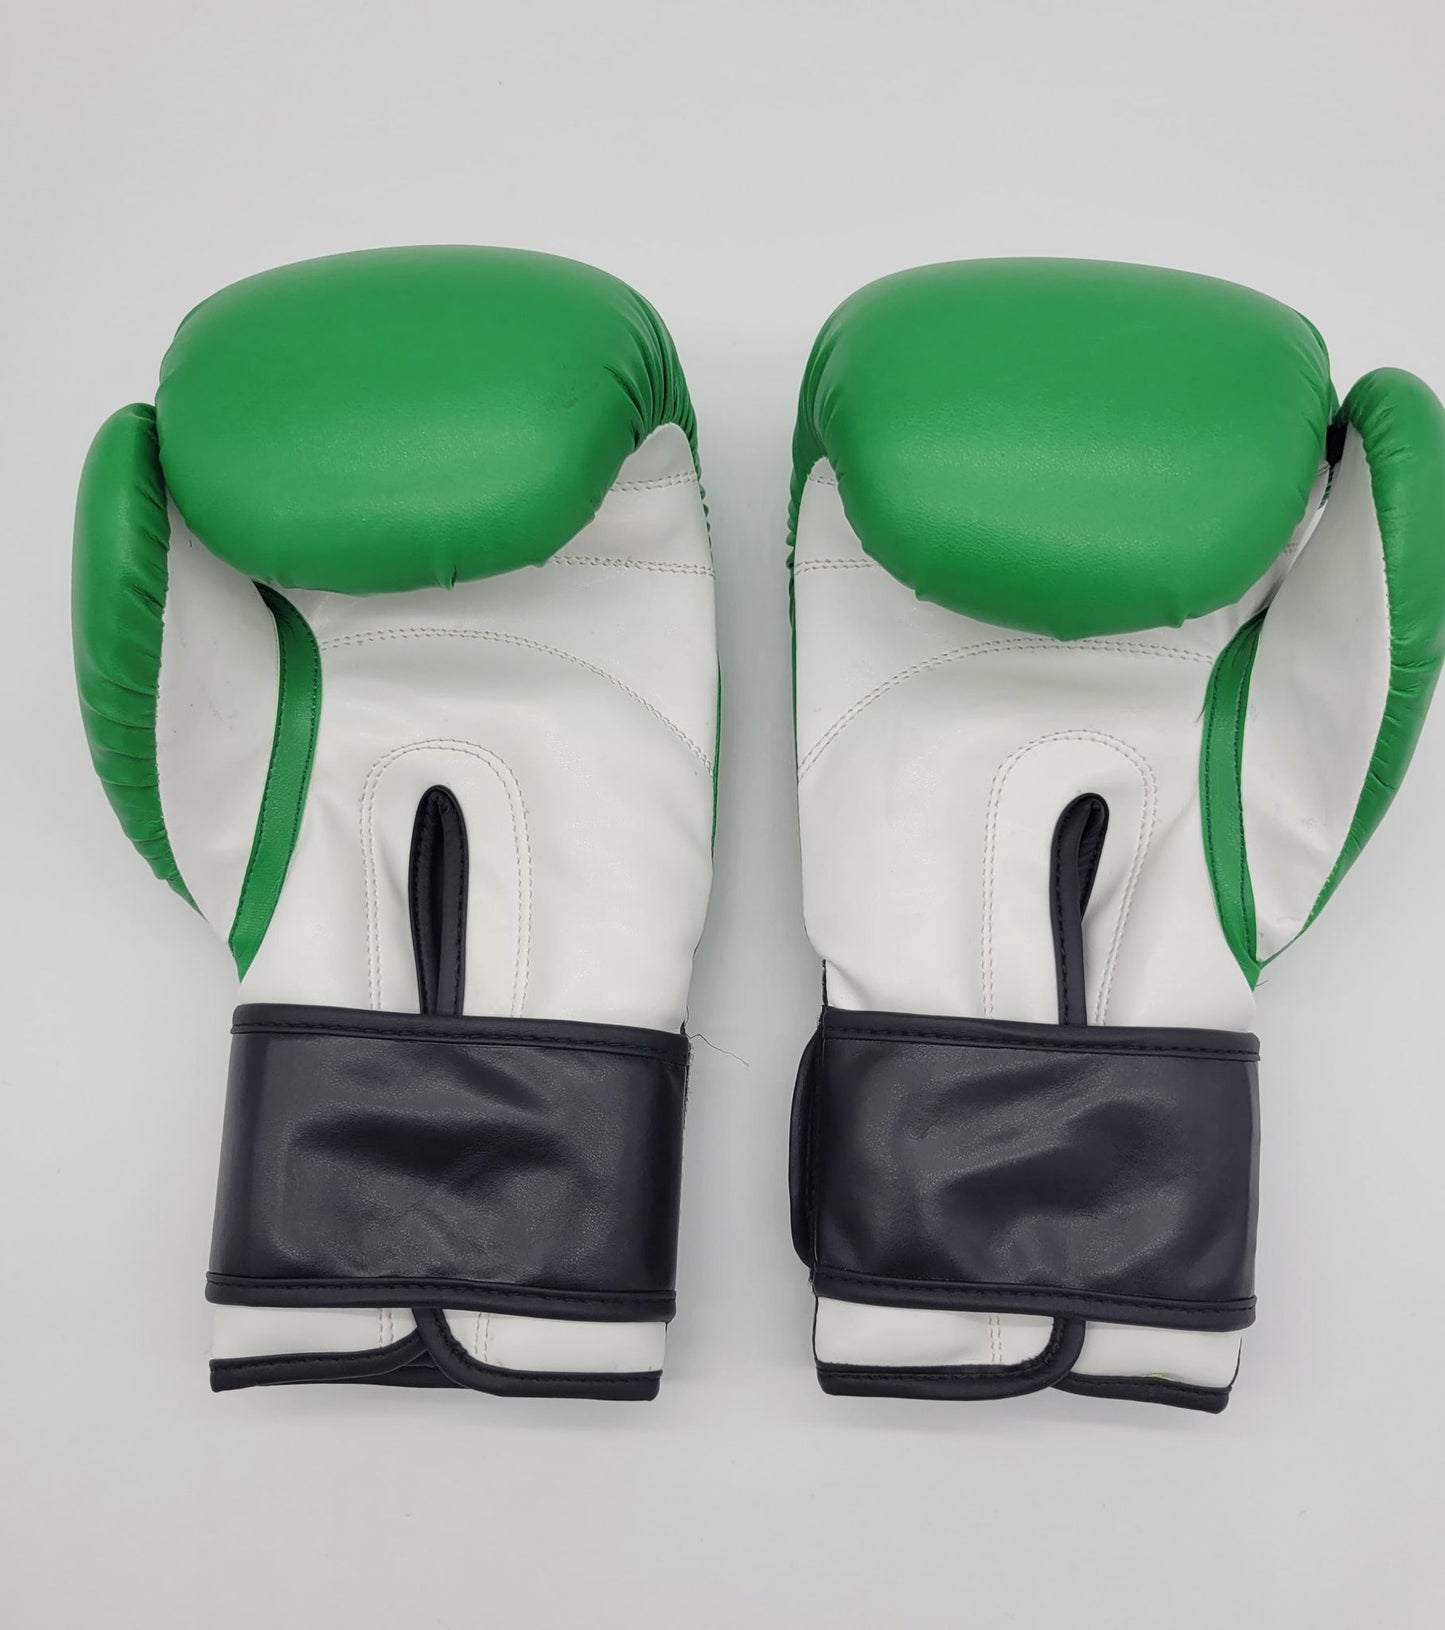 Africa Top Team Nigeria Green/Black 14oz Training gloves   Boxing, MMA